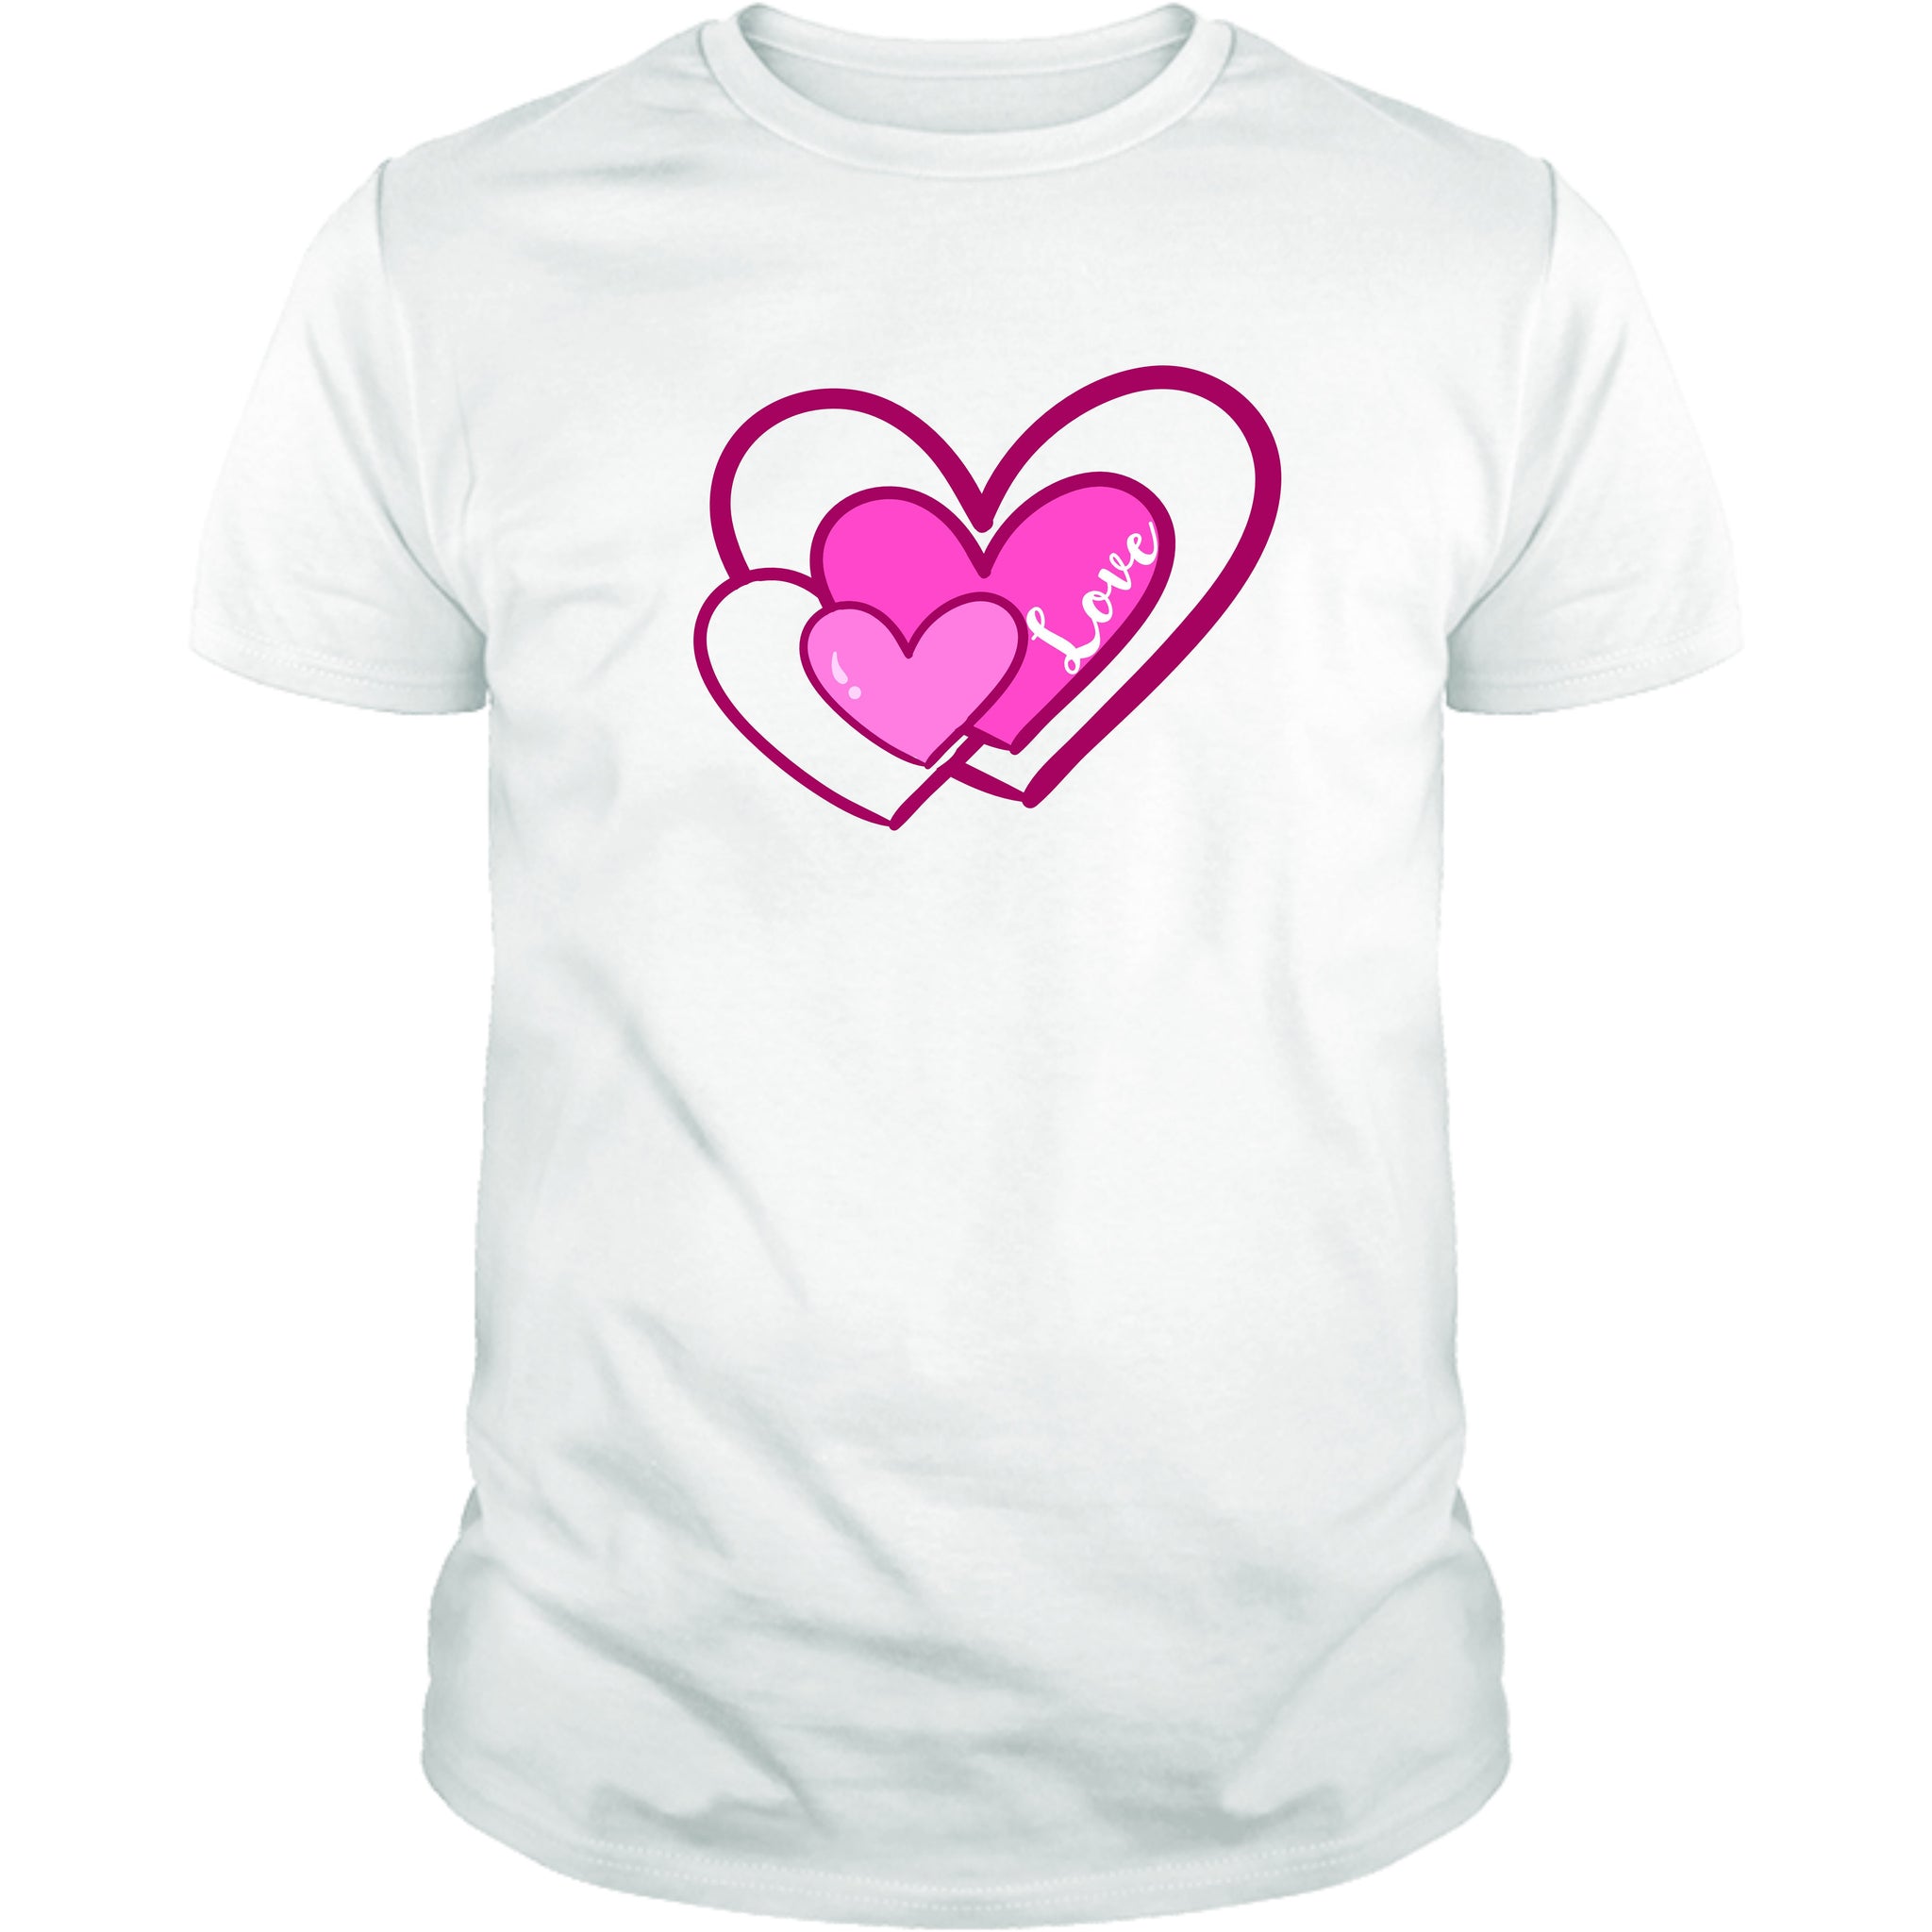 Valentine's Hearts in Love T-Shirt